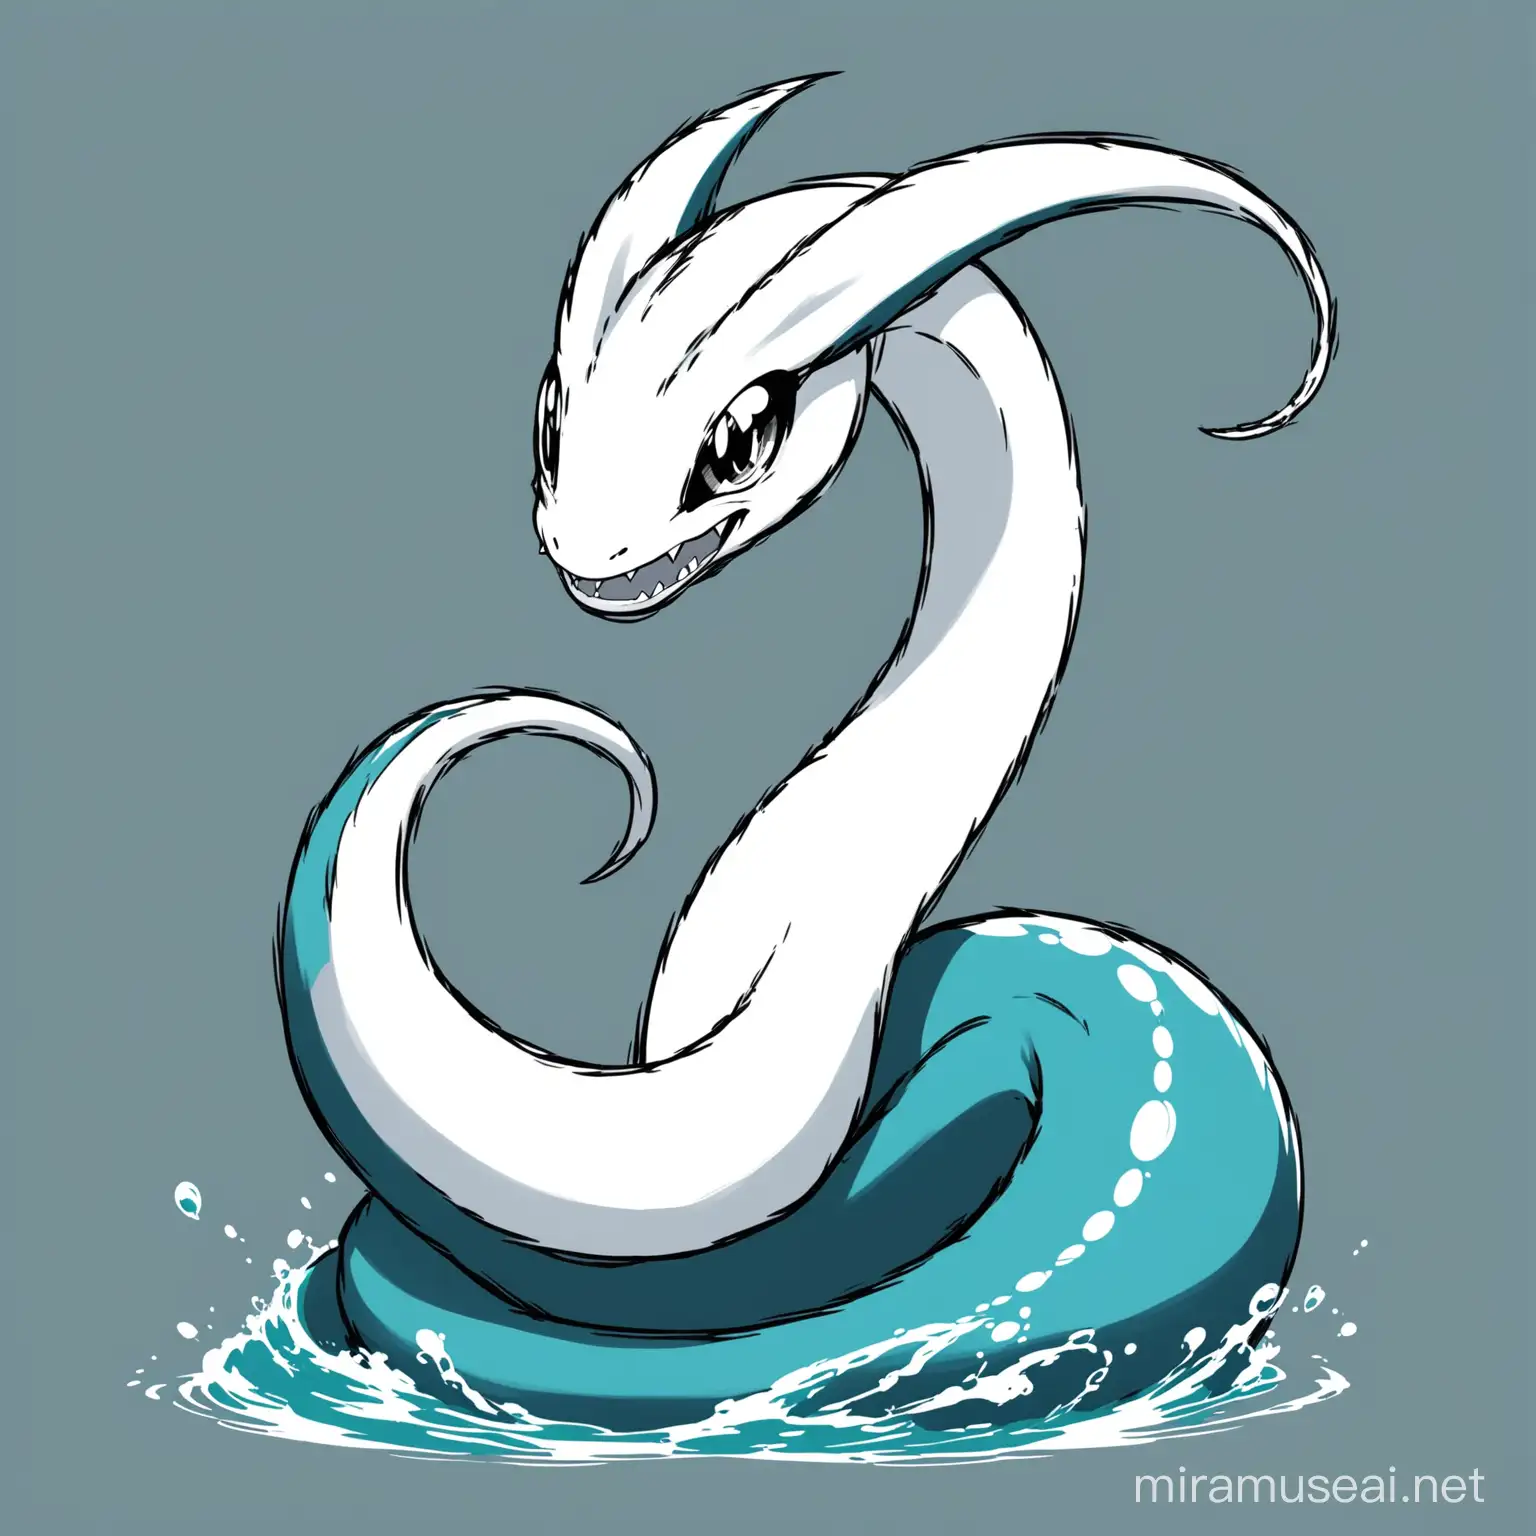 Menacing Black and White Water Serpent Similar to Dratini